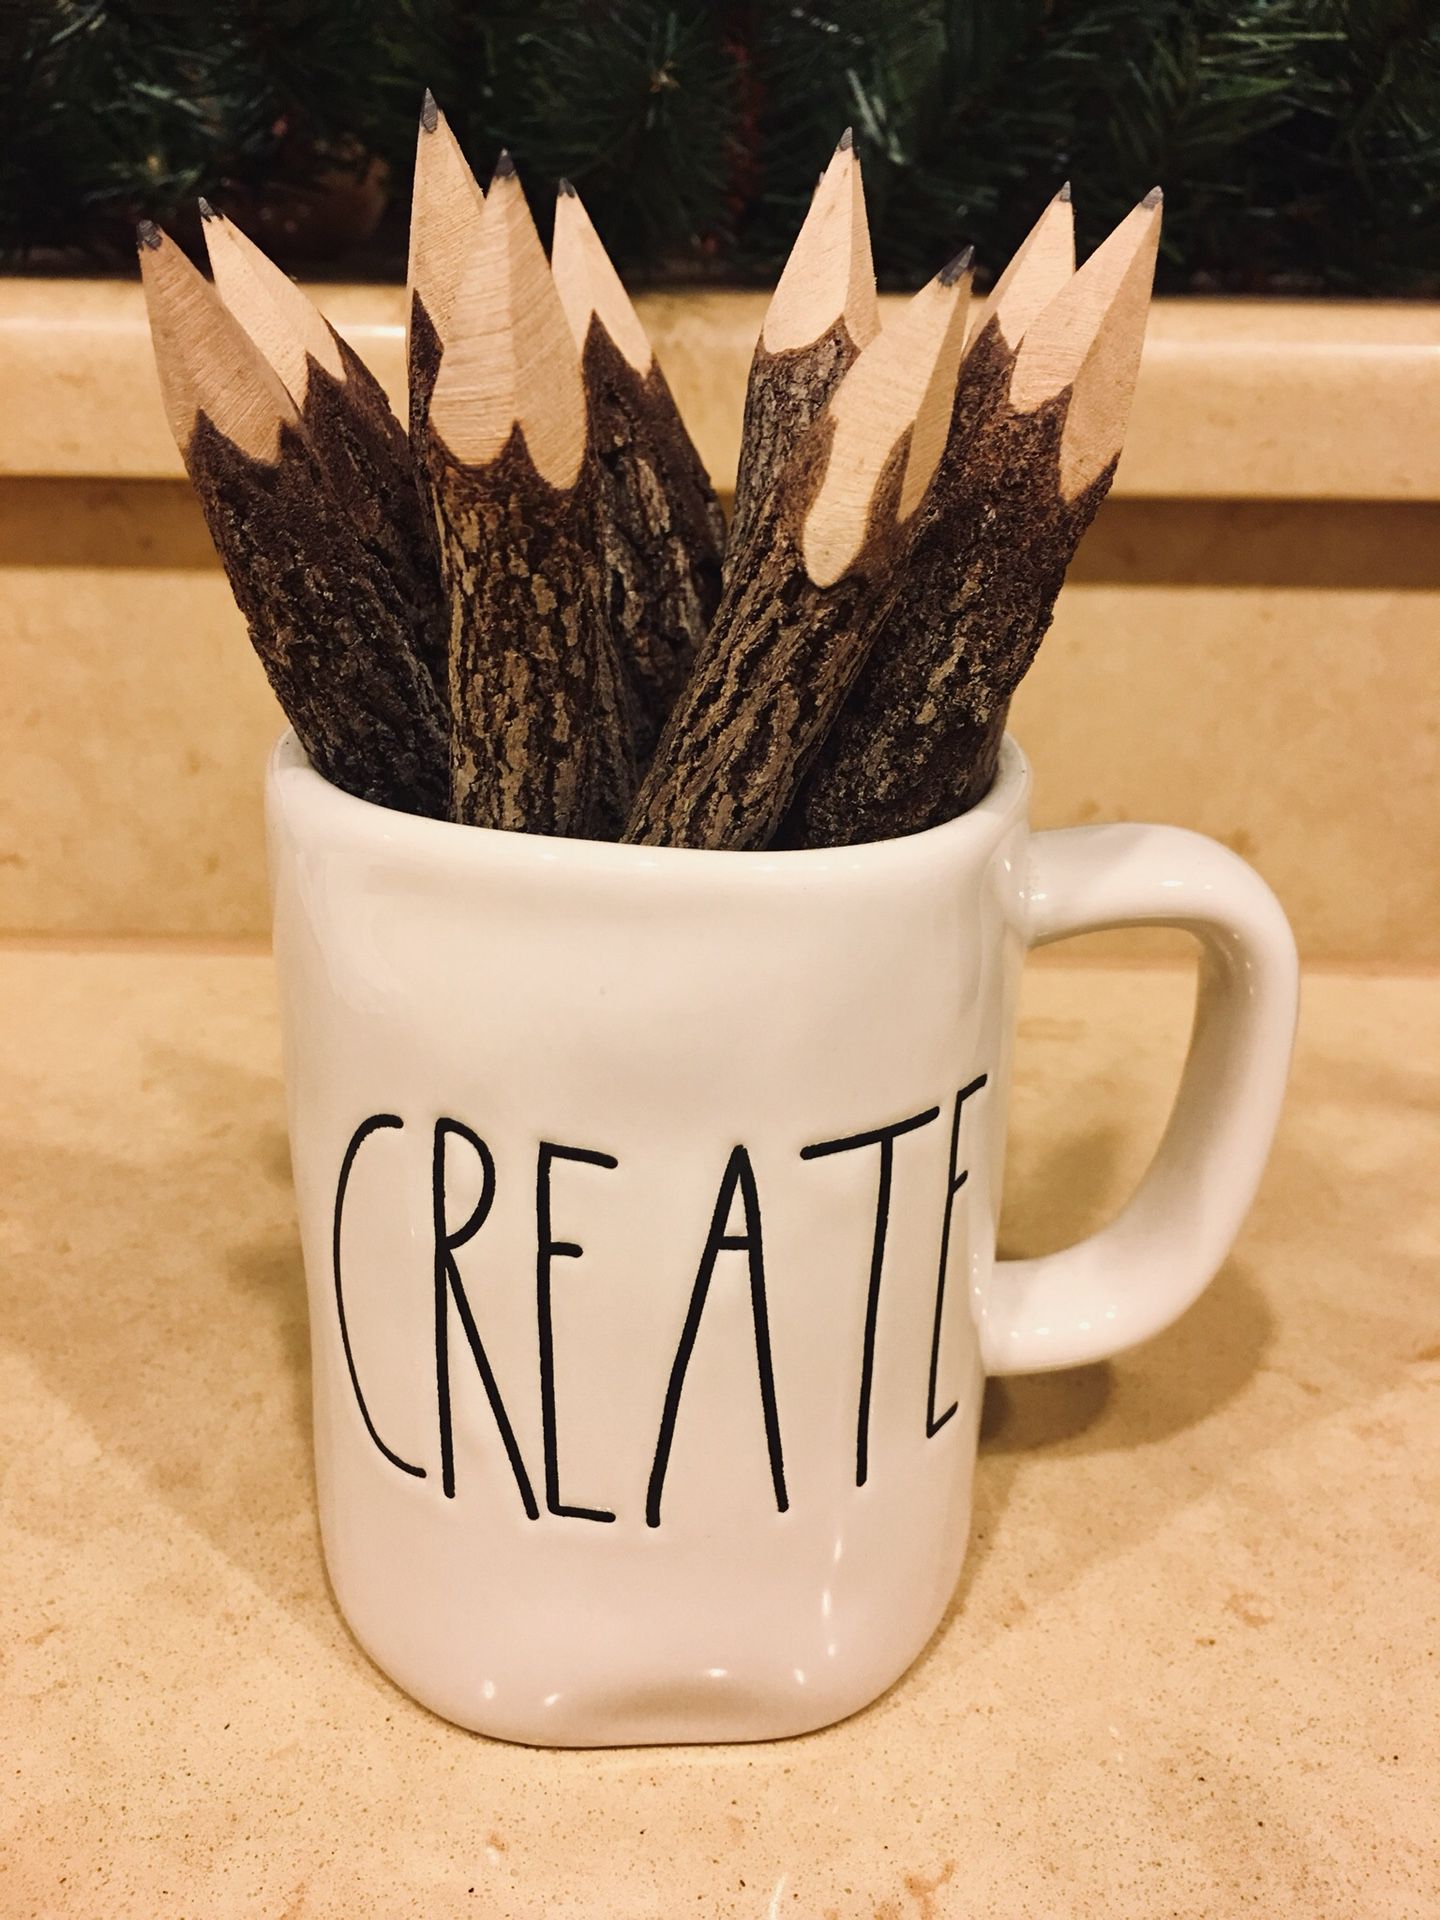 Create mug, bark pencils